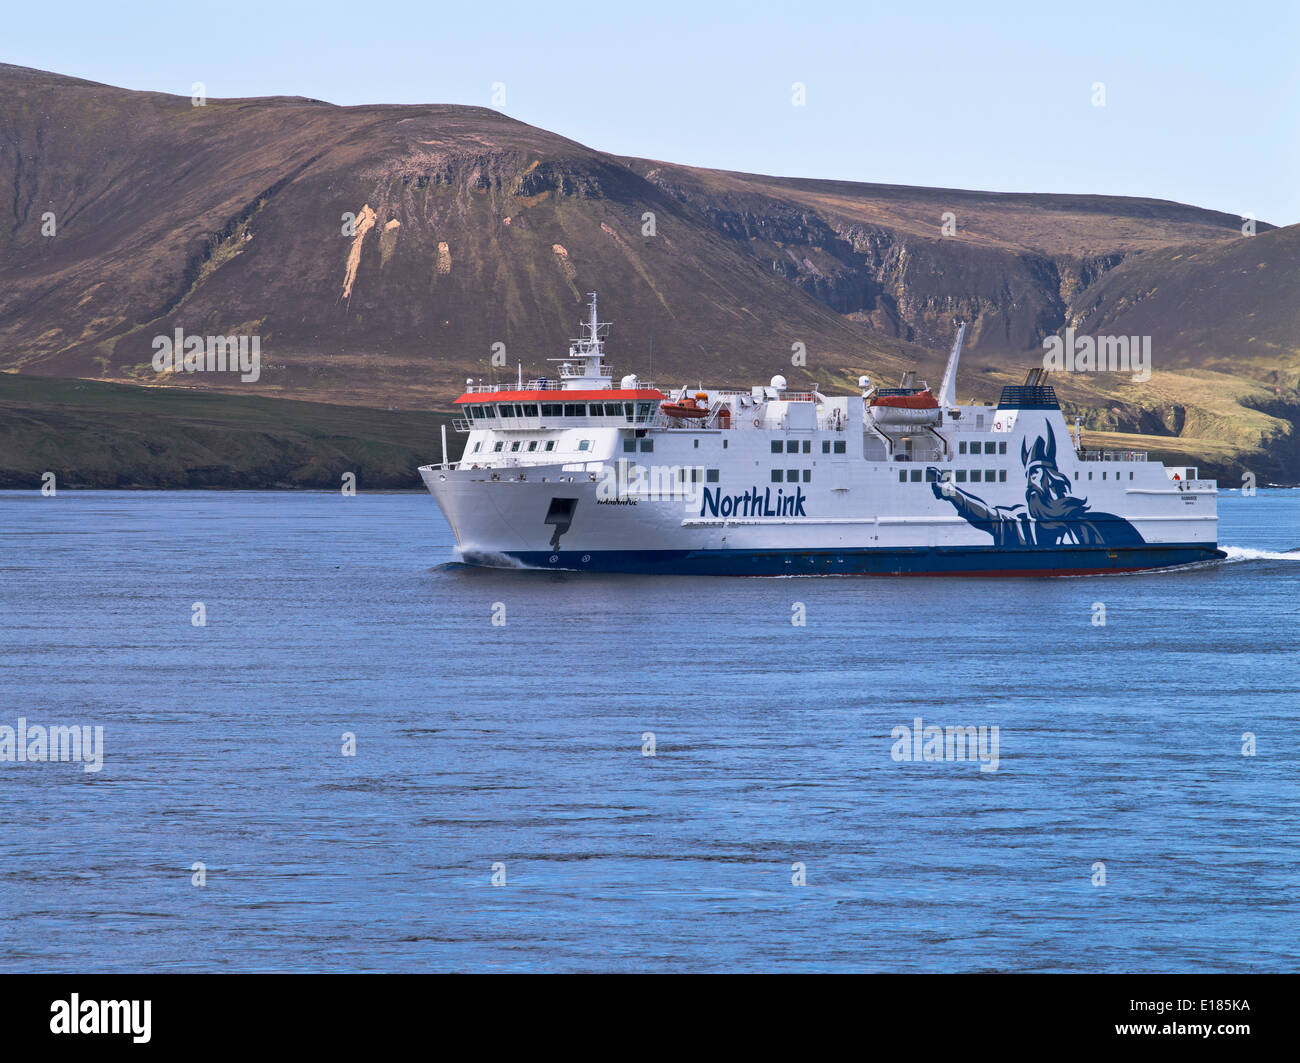 Dh northlink Ferries HOY SOUND ORKNEY serco Fähre MV Hamnavoe segeln Hoy sound Schottland Fähre uk Scottish ro Ro Stockfoto